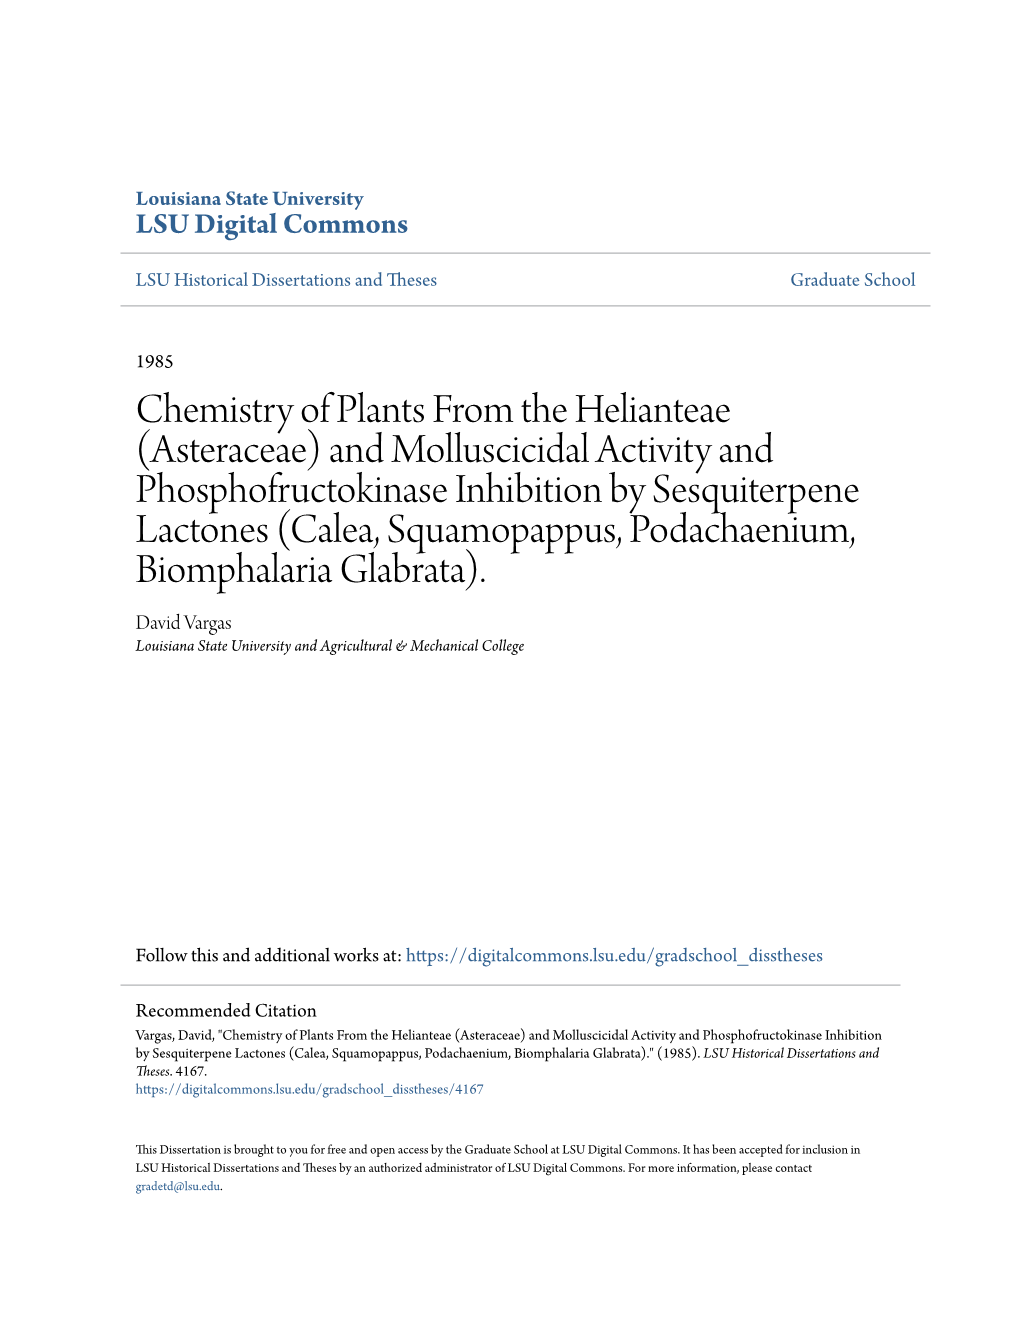 Asteraceae) and Molluscicidal Activity and Phosphofructokinase Inhibition by Sesquiterpene Lactones (Calea, Squamopappus, Podachaenium, Biomphalaria Glabrata